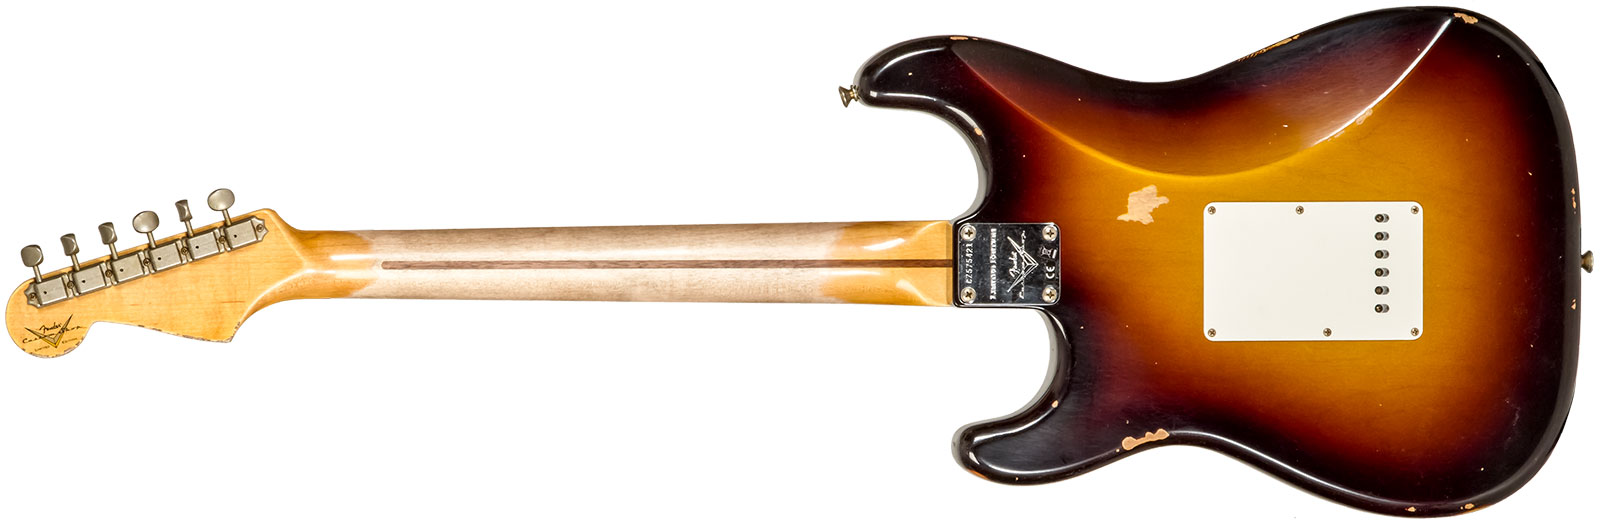 Fender Custom Shop Strat 1957 3s Trem Mn #cz575421 - Relic 2-color Sunburst - Elektrische gitaar in Str-vorm - Variation 1